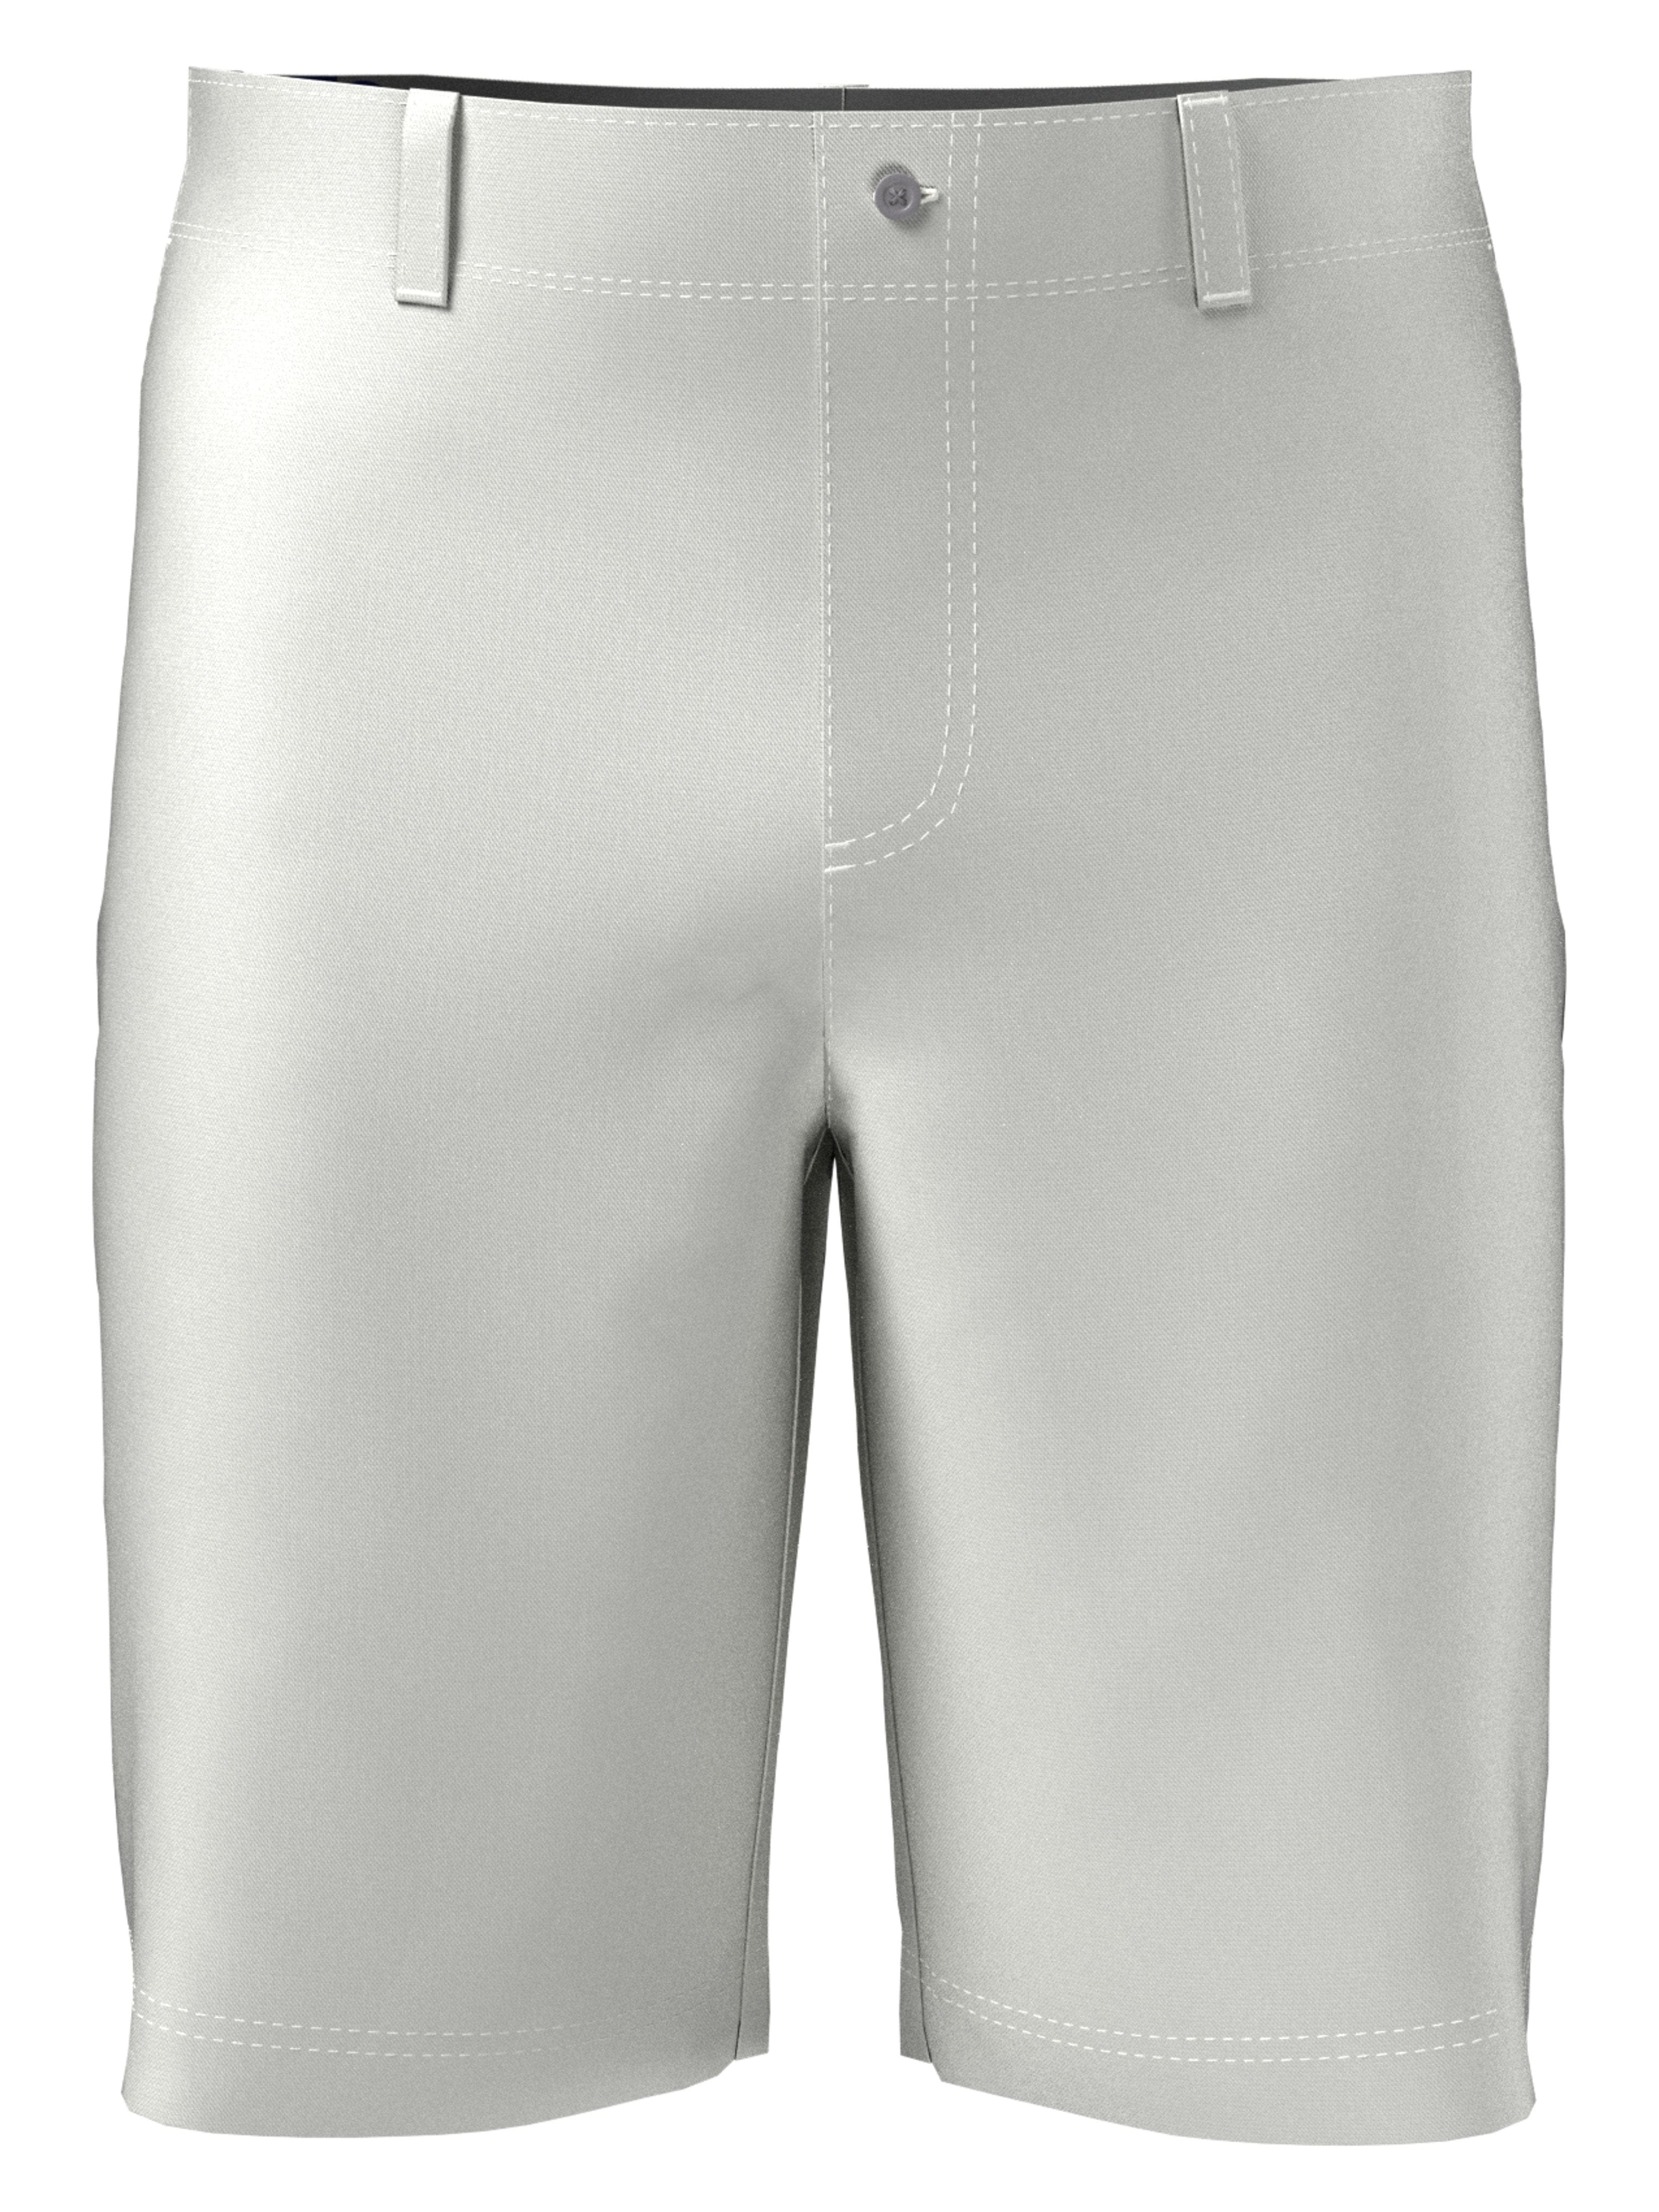 PGA TOUR Apparel Boys Flat Front Solid Golf Shorts, Size Large, White, Polyester/Elastane | Golf Apparel Shop